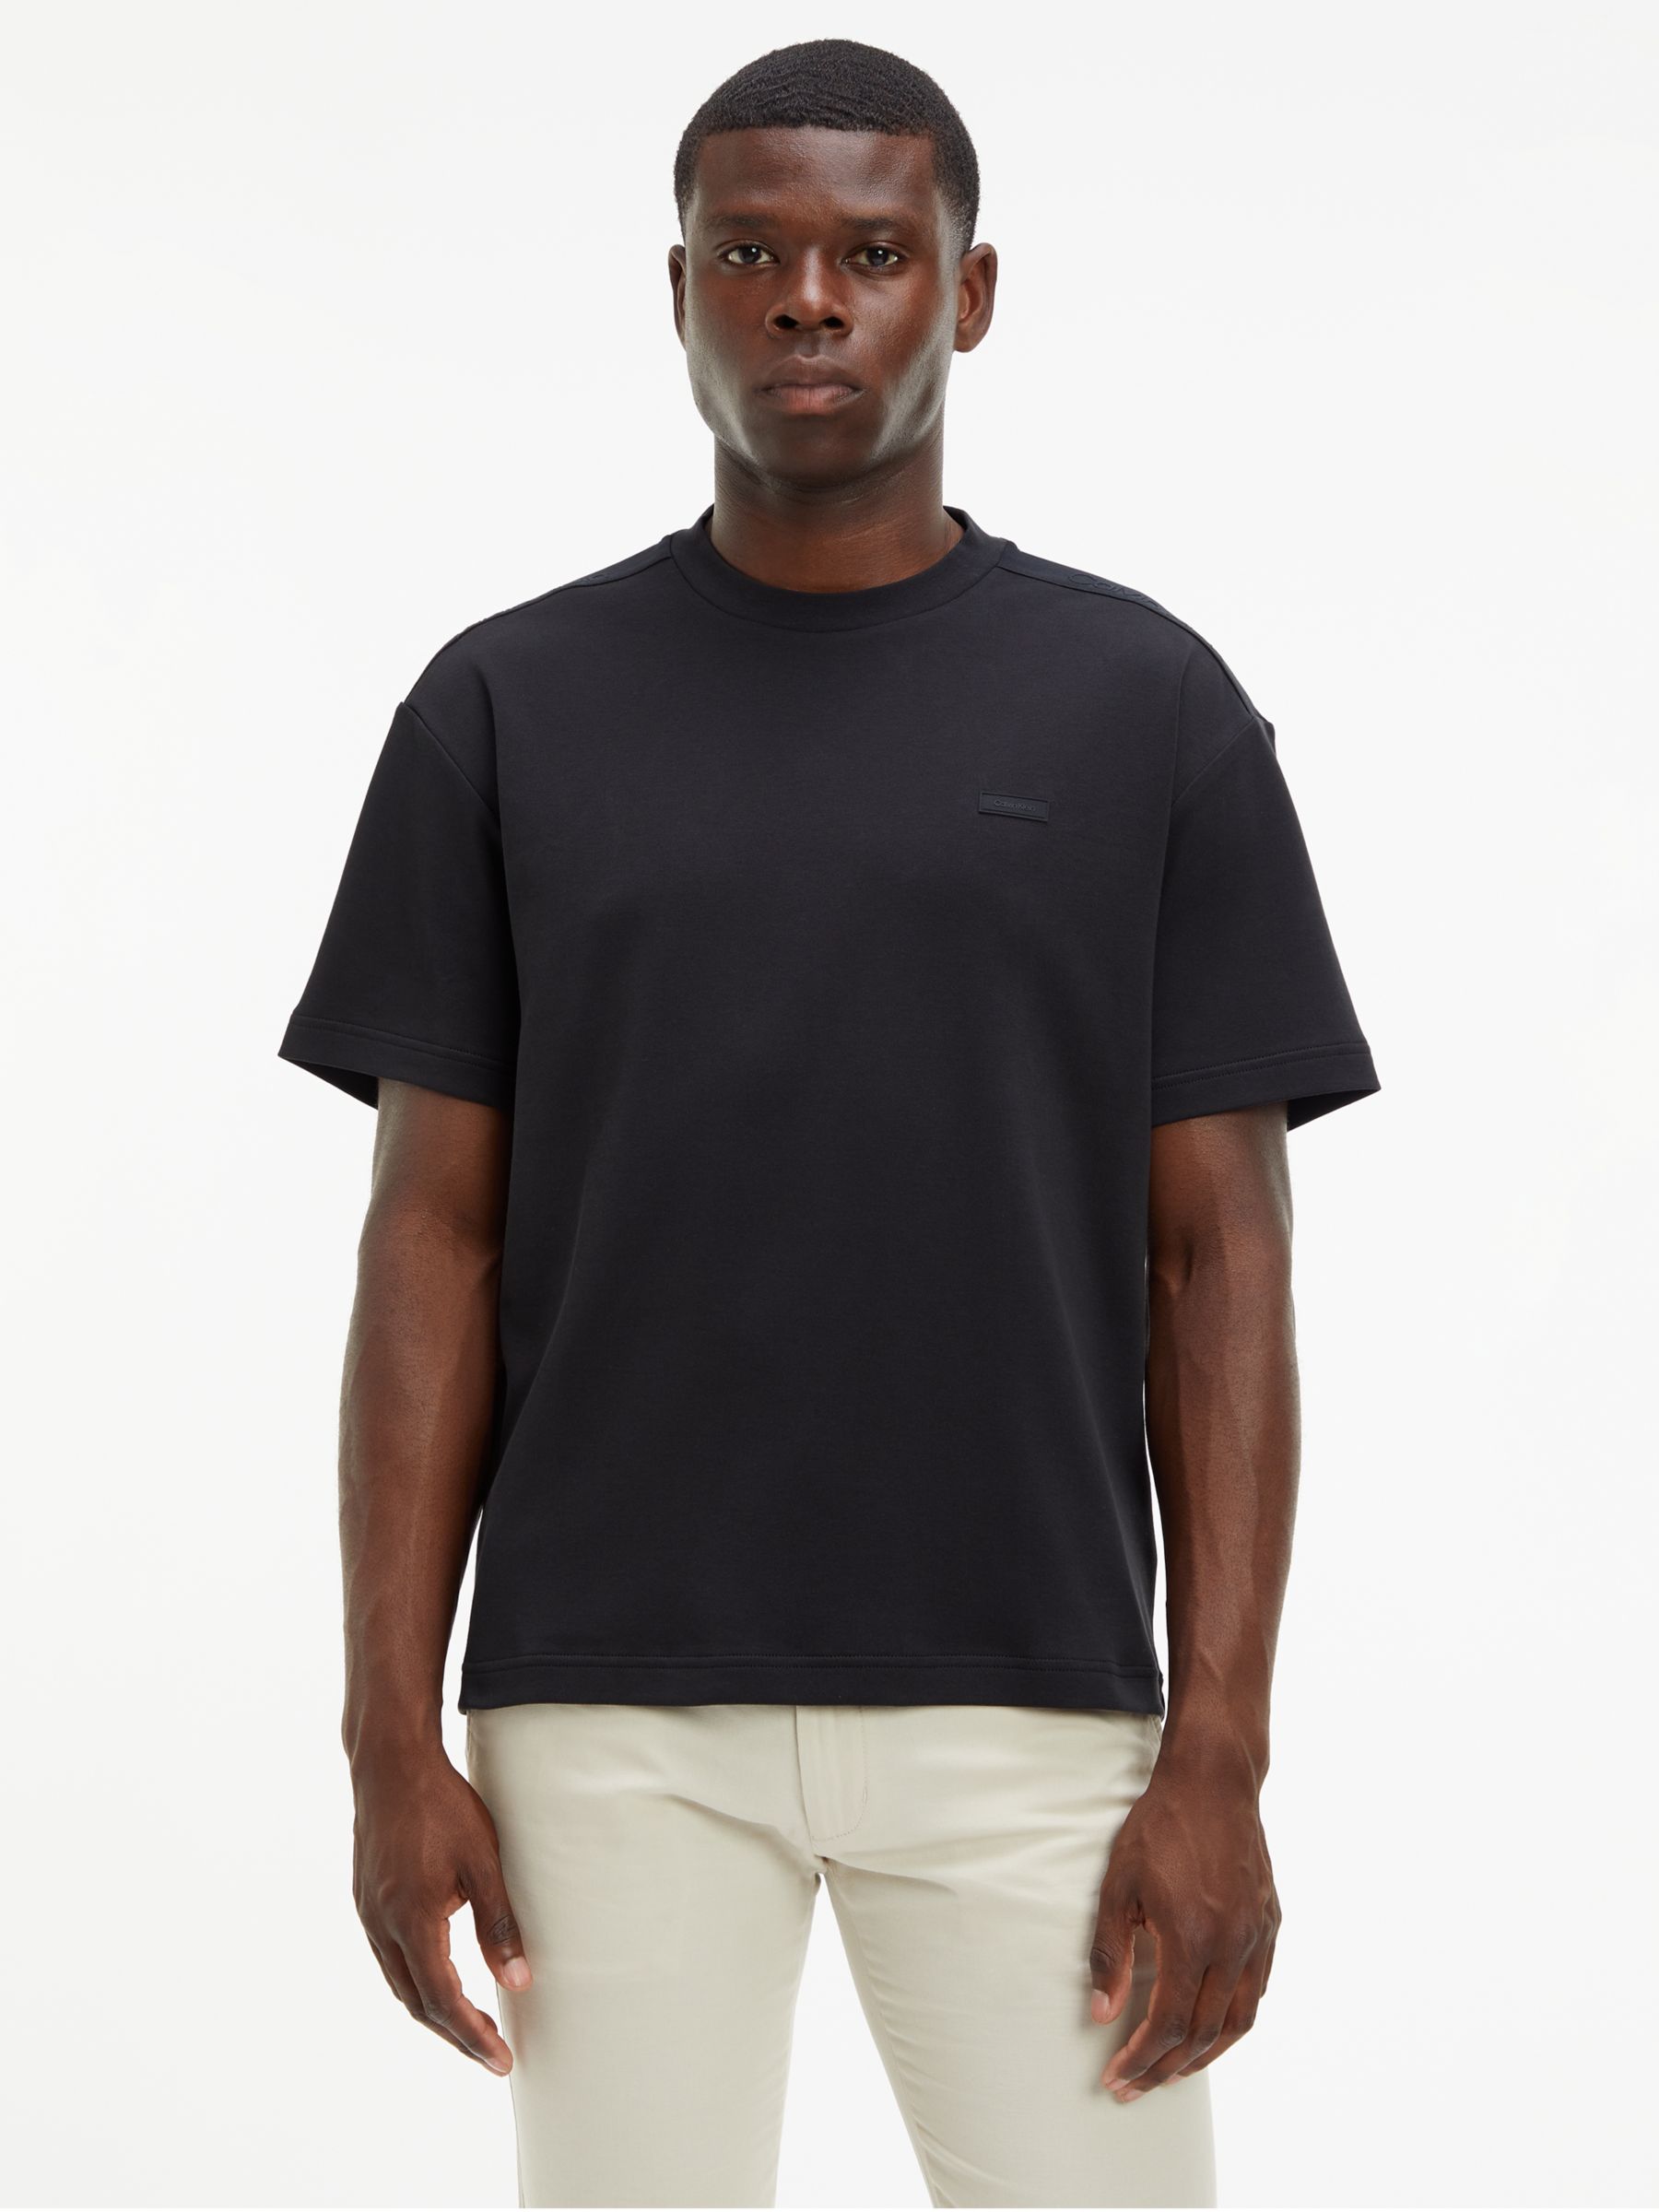 Calvin Klein Jeans Core Logo T-Shirt, Ck Black at John Lewis